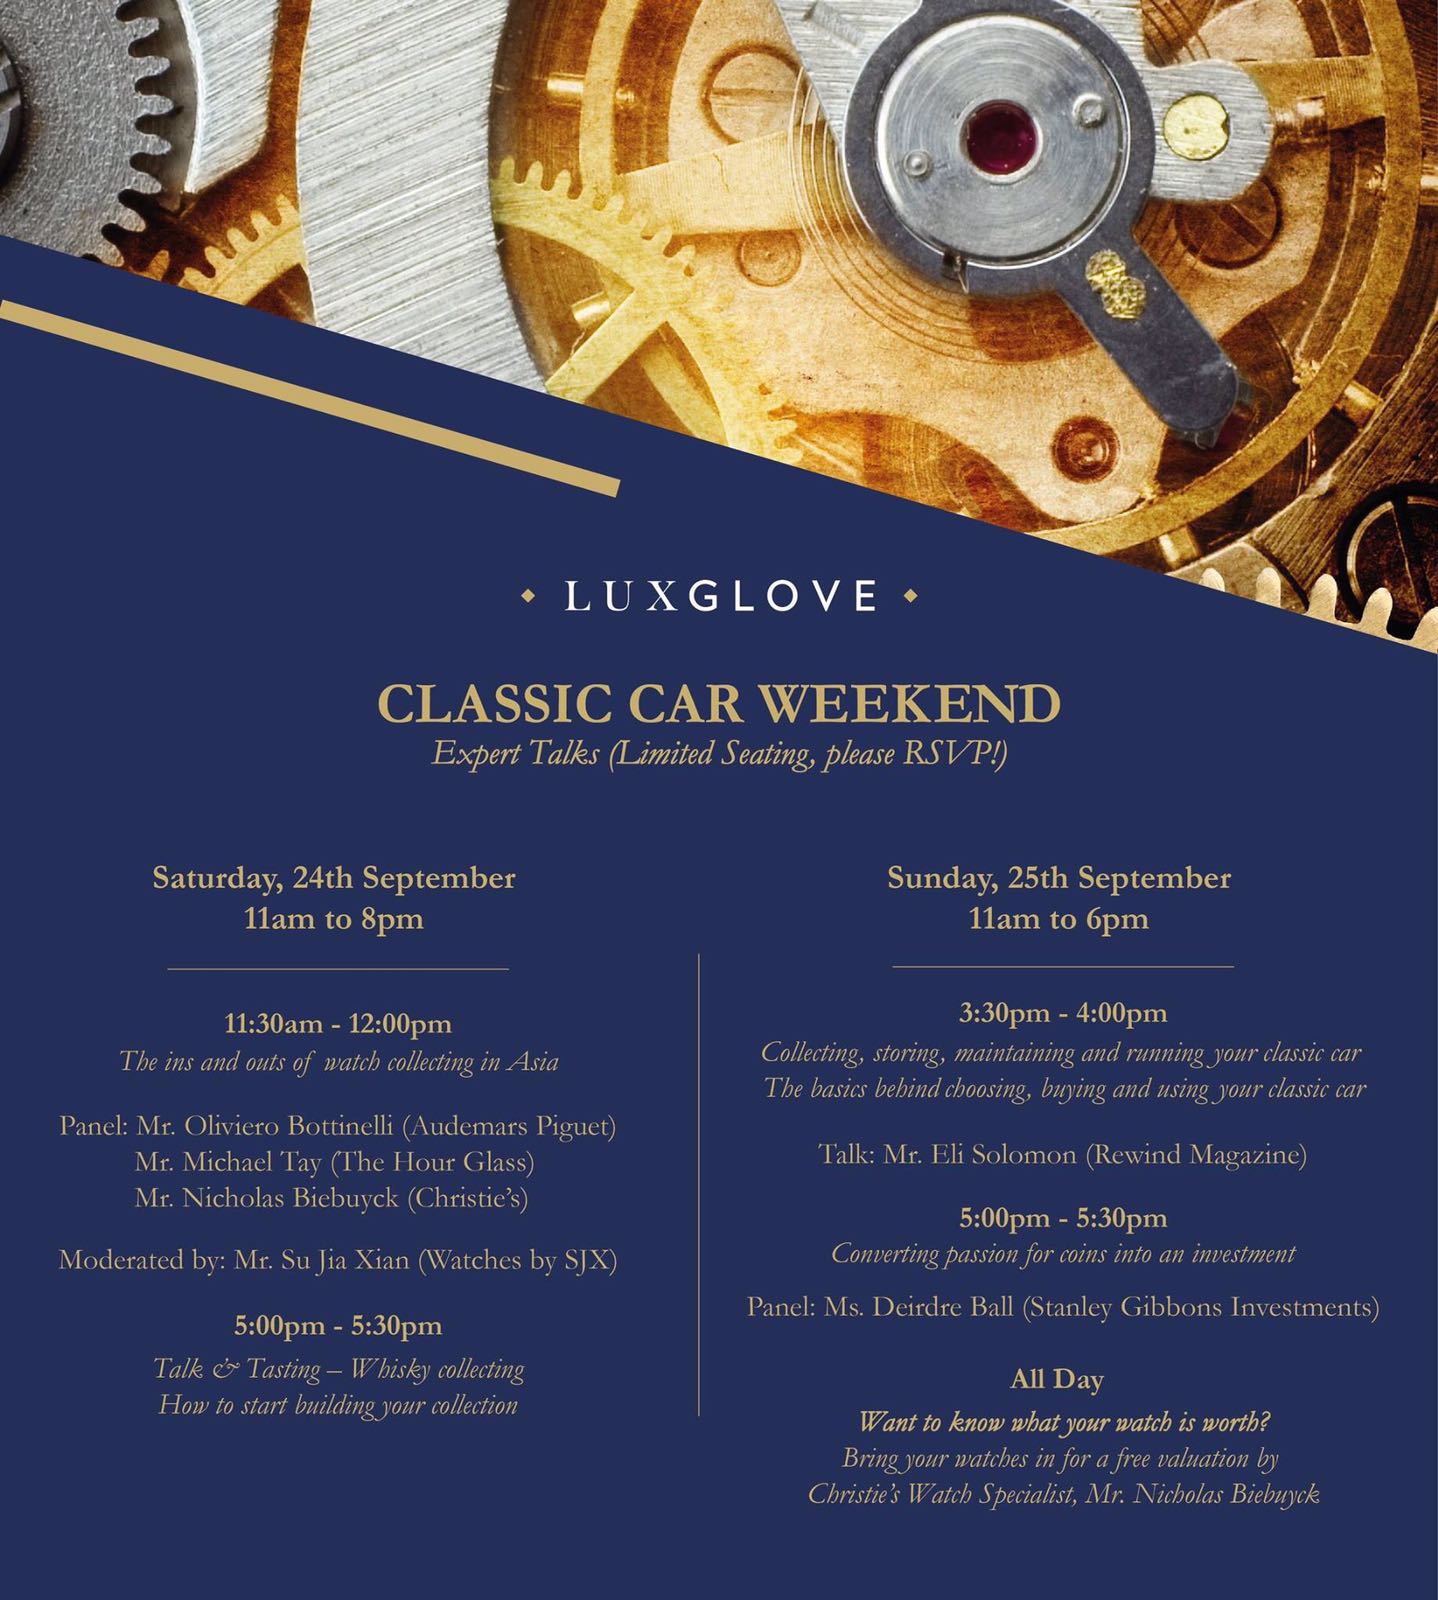 Luxglove Classic Car Weekend 2016